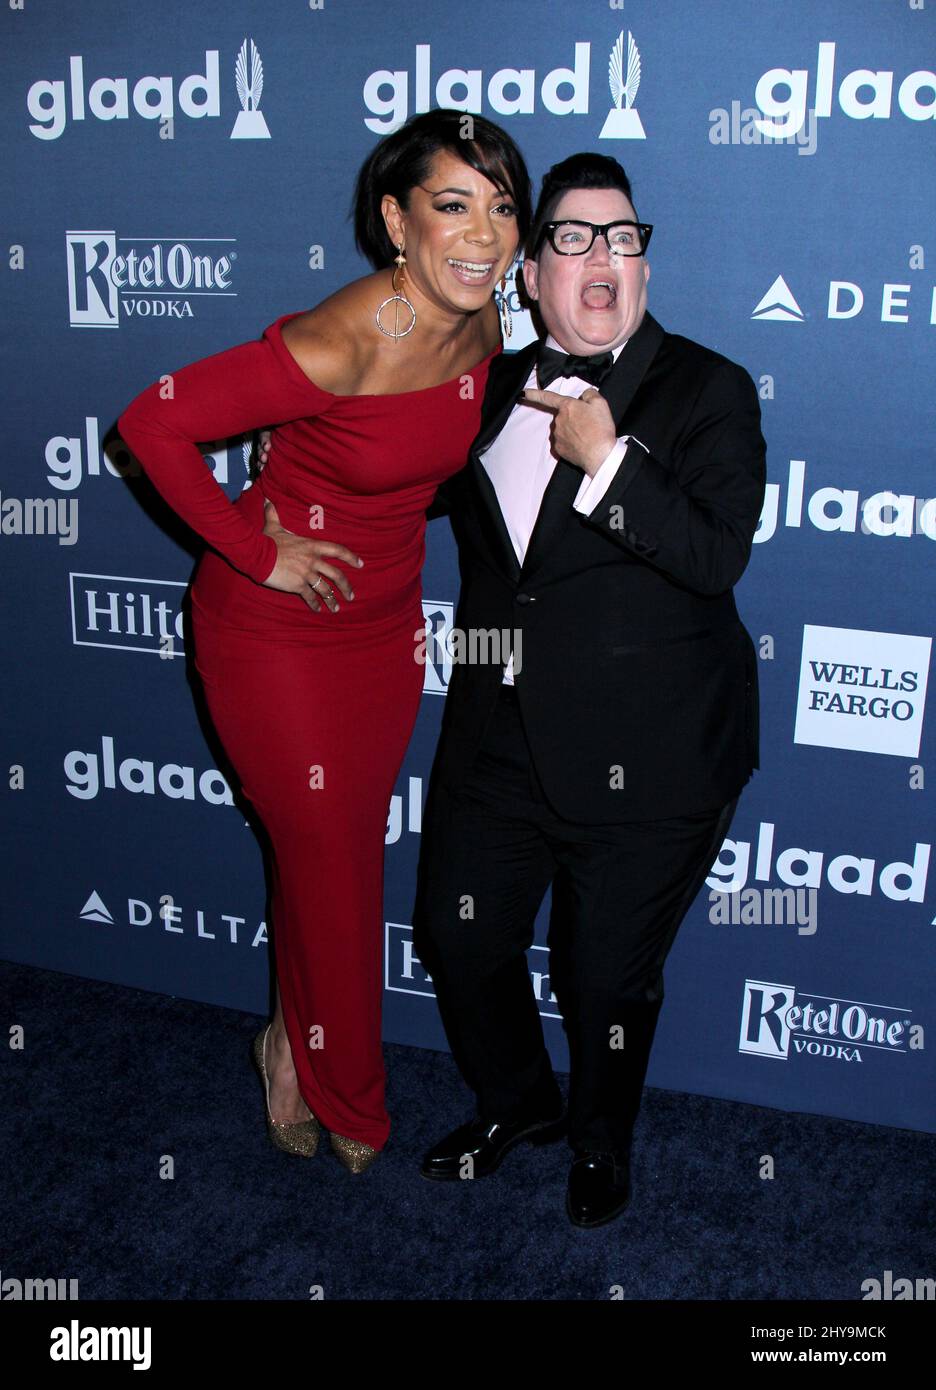 Selenis Leyva und Lea DeLaria nehmen an den jährlichen GLAAD Media Awards 27. in Los Angeles, Kalifornien, Teil. Stockfoto